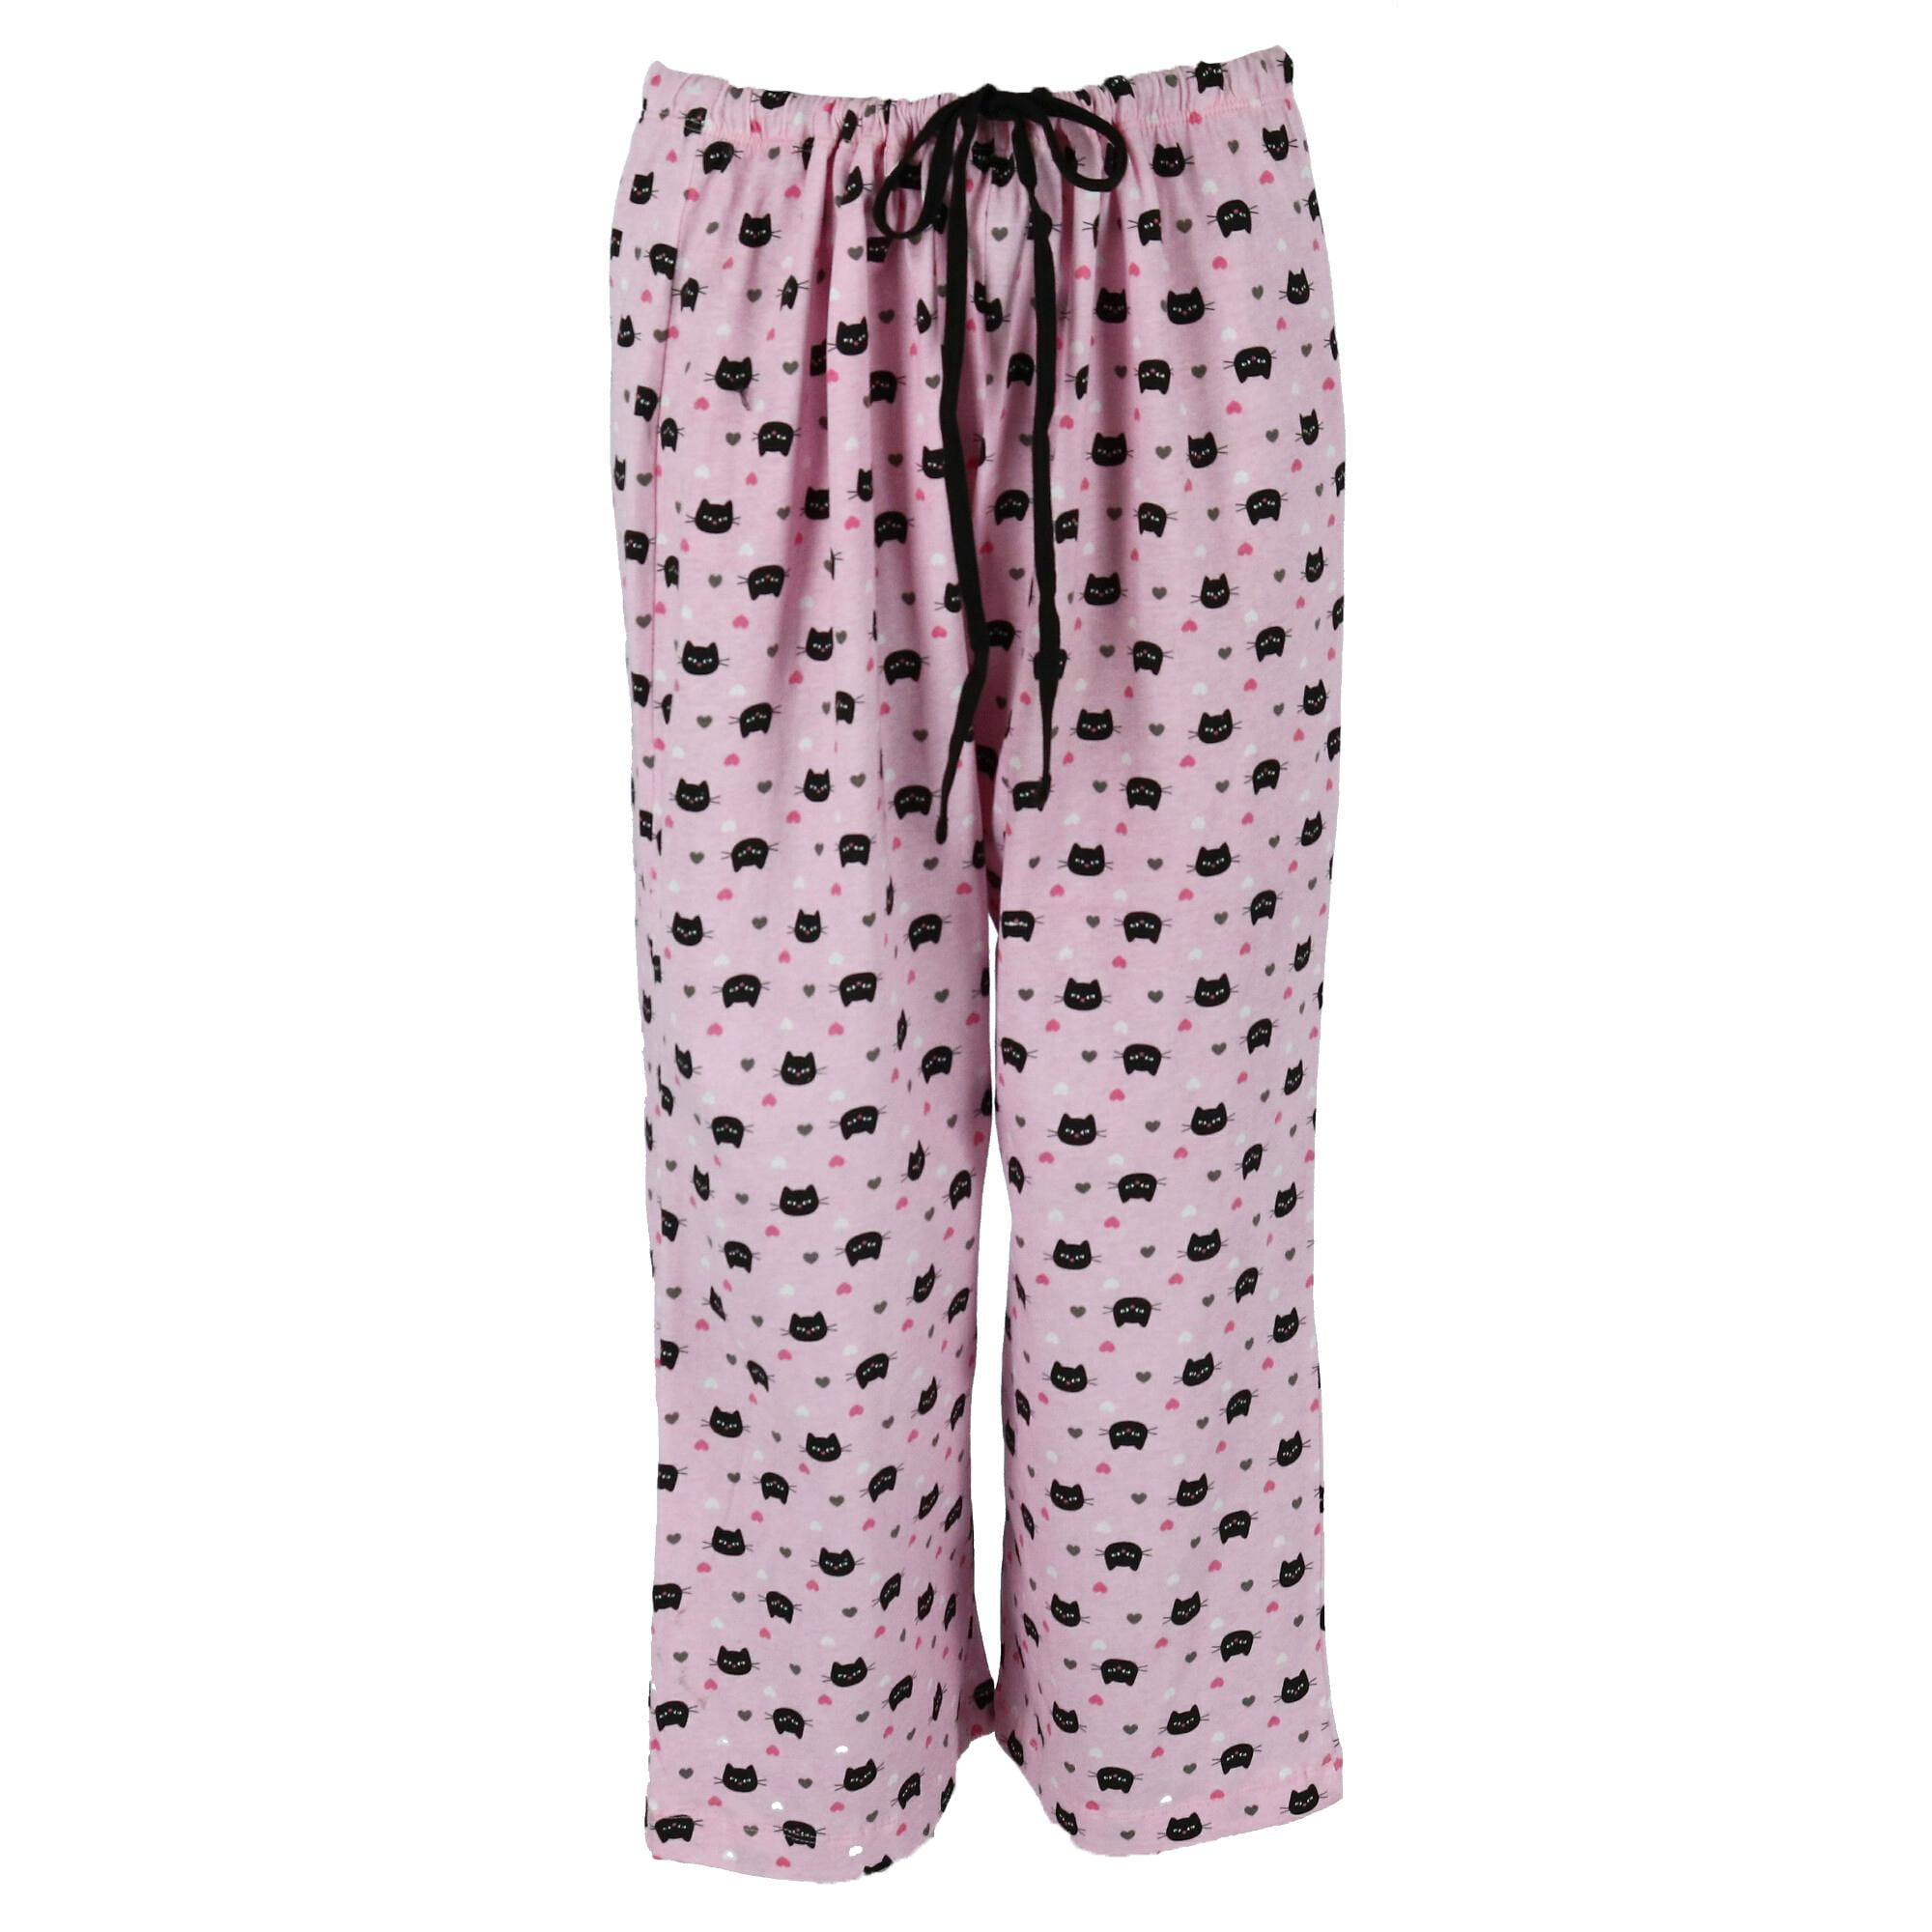 Rene Rofe Women's Plus Size Conversational Capri Pajama Set